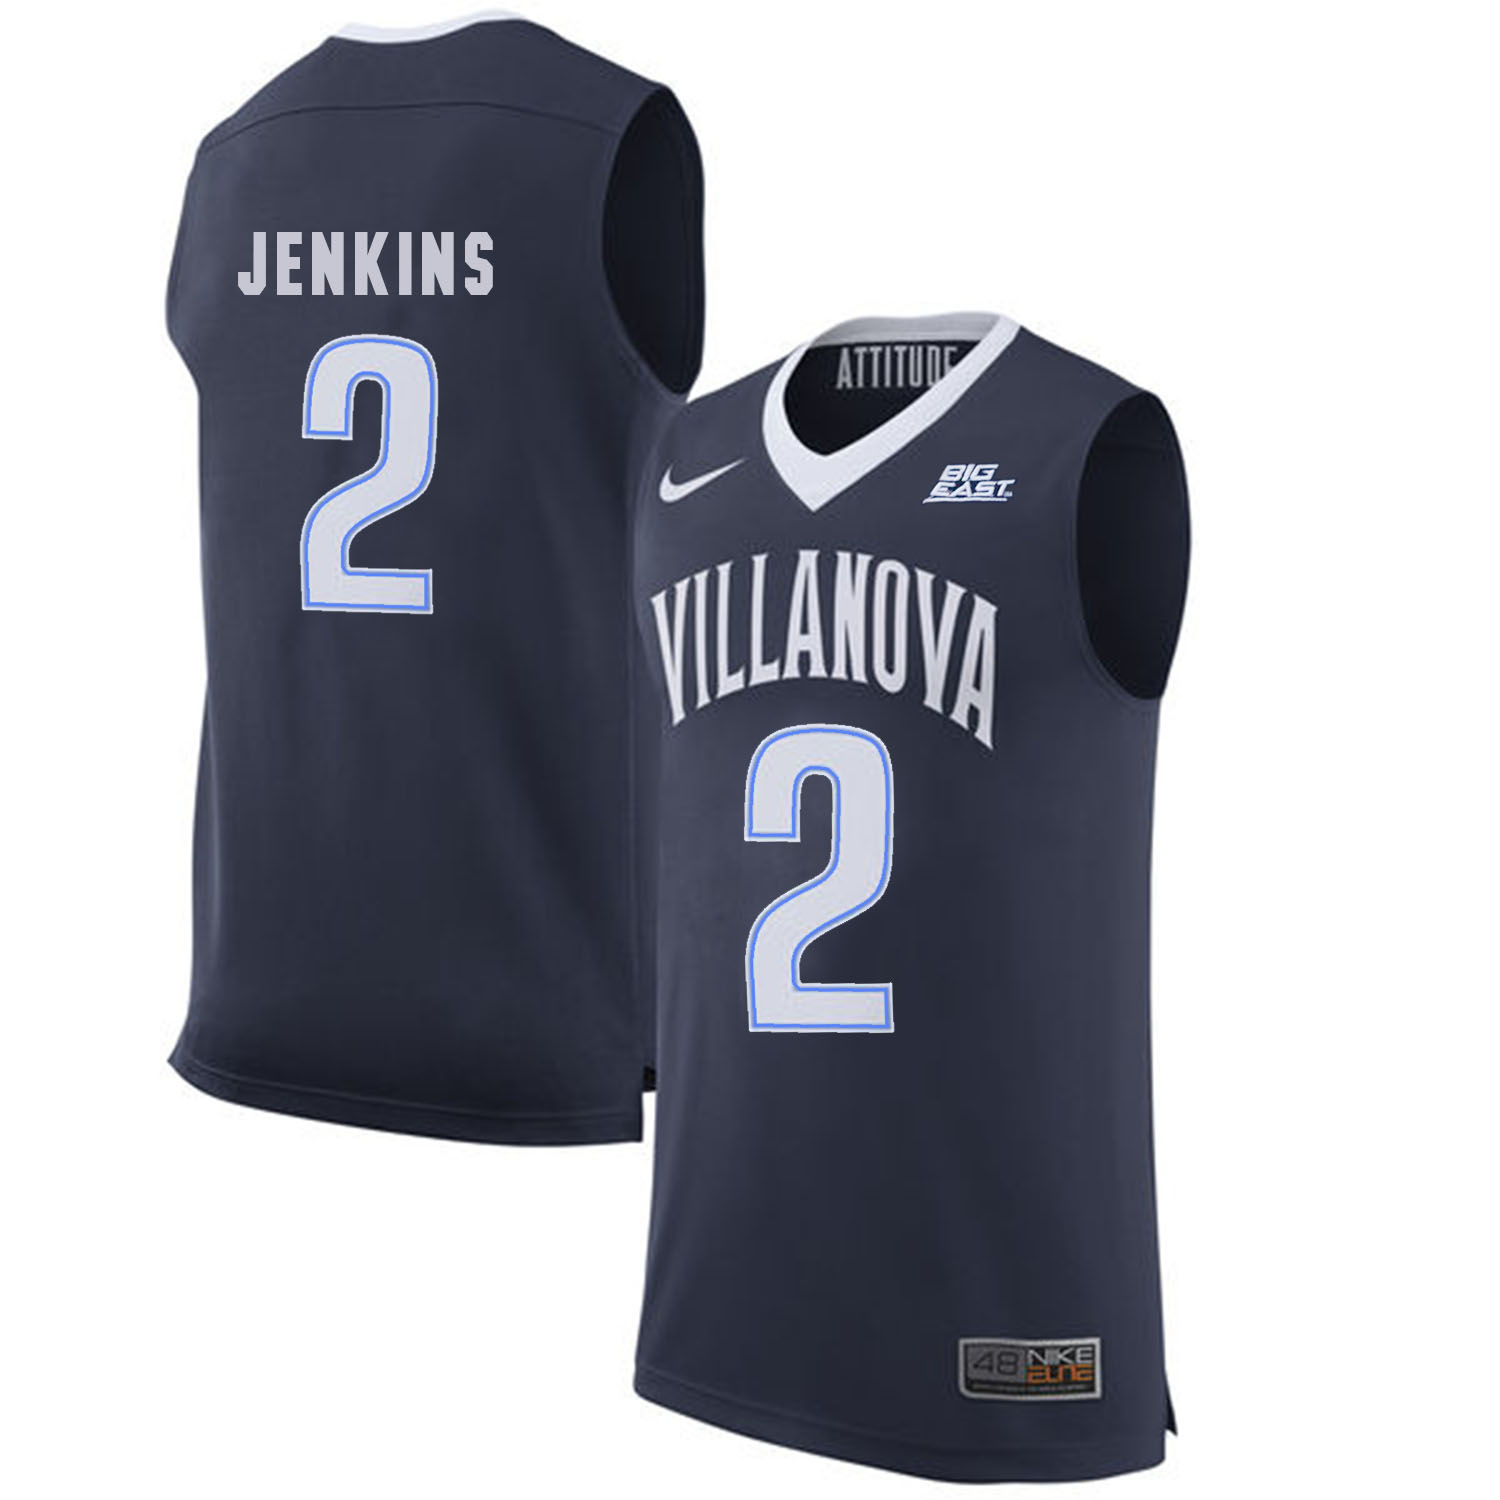 Villanova Wildcats 2 Kris Jenkins Navy College Basketball Elite Jersey